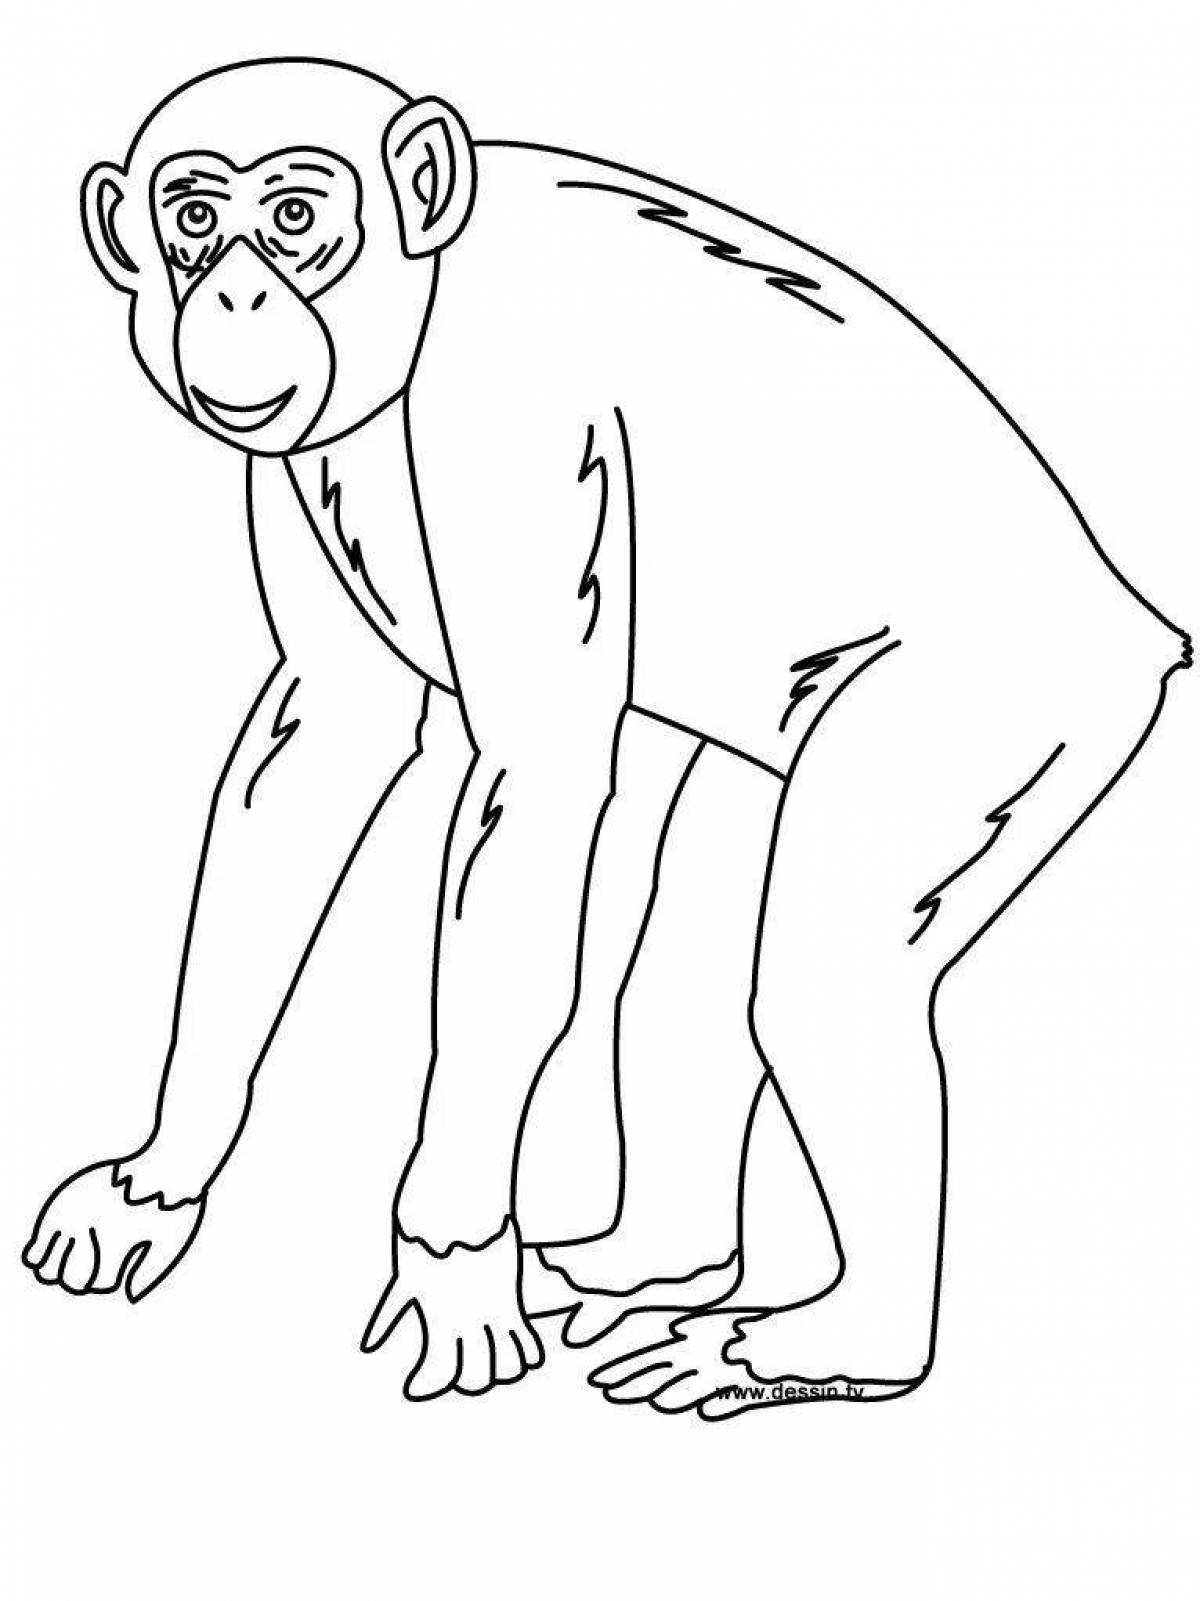 Regal chimpanzee coloring page